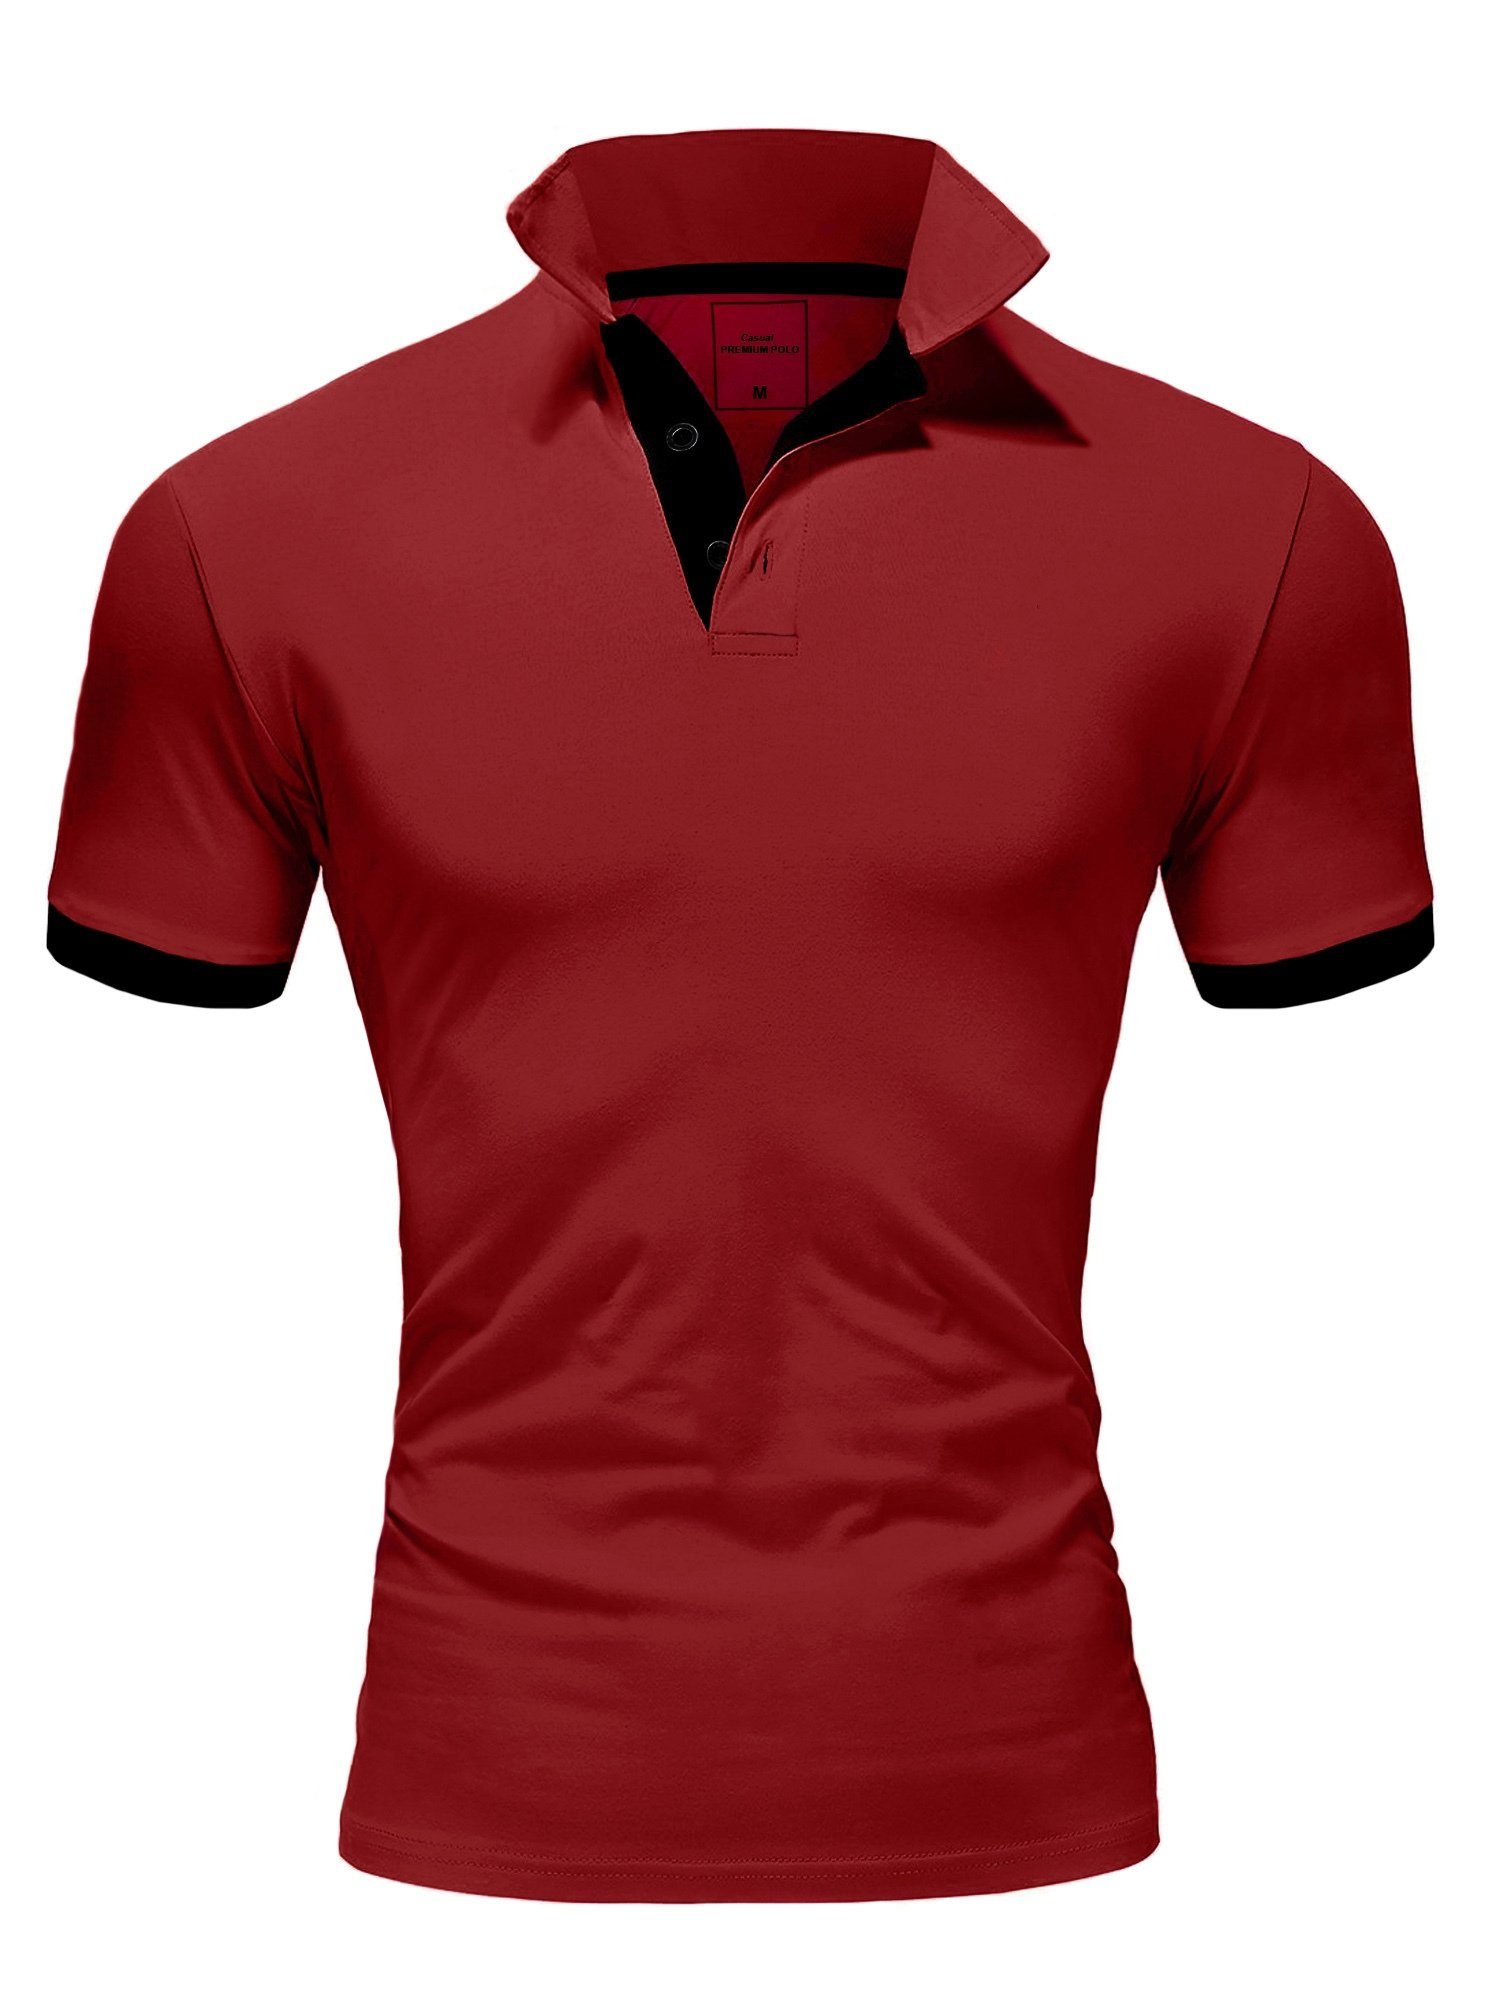 REPUBLIX Poloshirt RONALD Herren Shirt Bordeaux/Schwarz mit Akzenten, in Piqué kontrastierenden Qualität